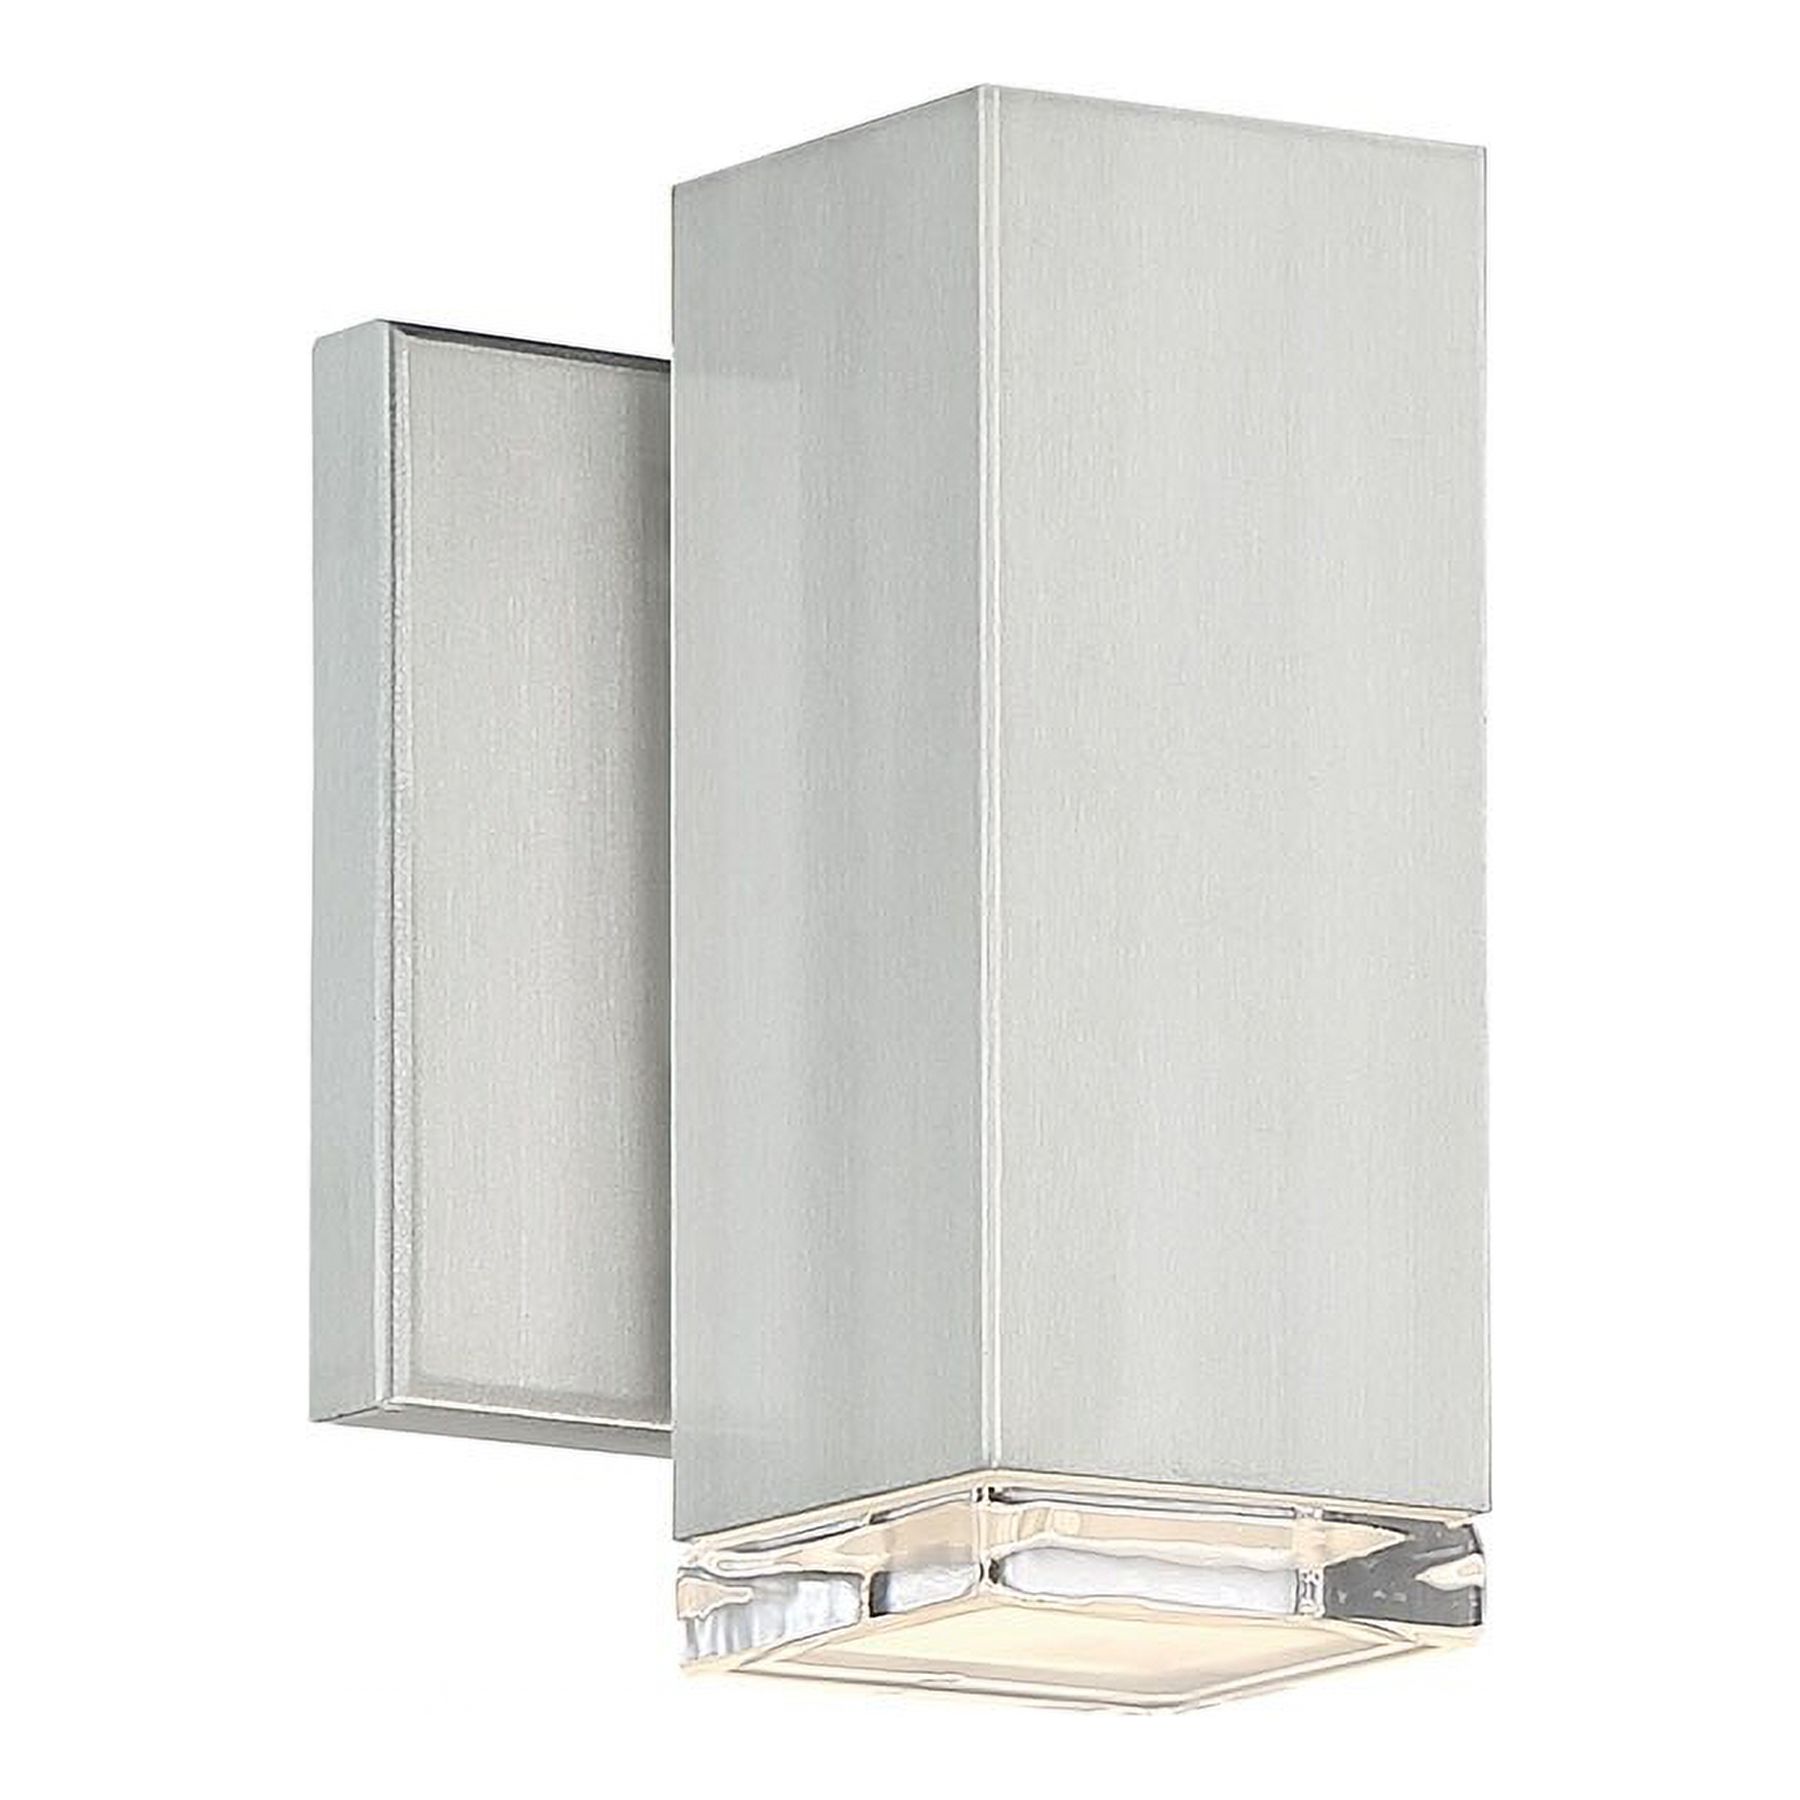 WAC Lighting Block 1-Light LED Aluminum Indoor & Outdoor Wall Light in Gray - image 1 of 5